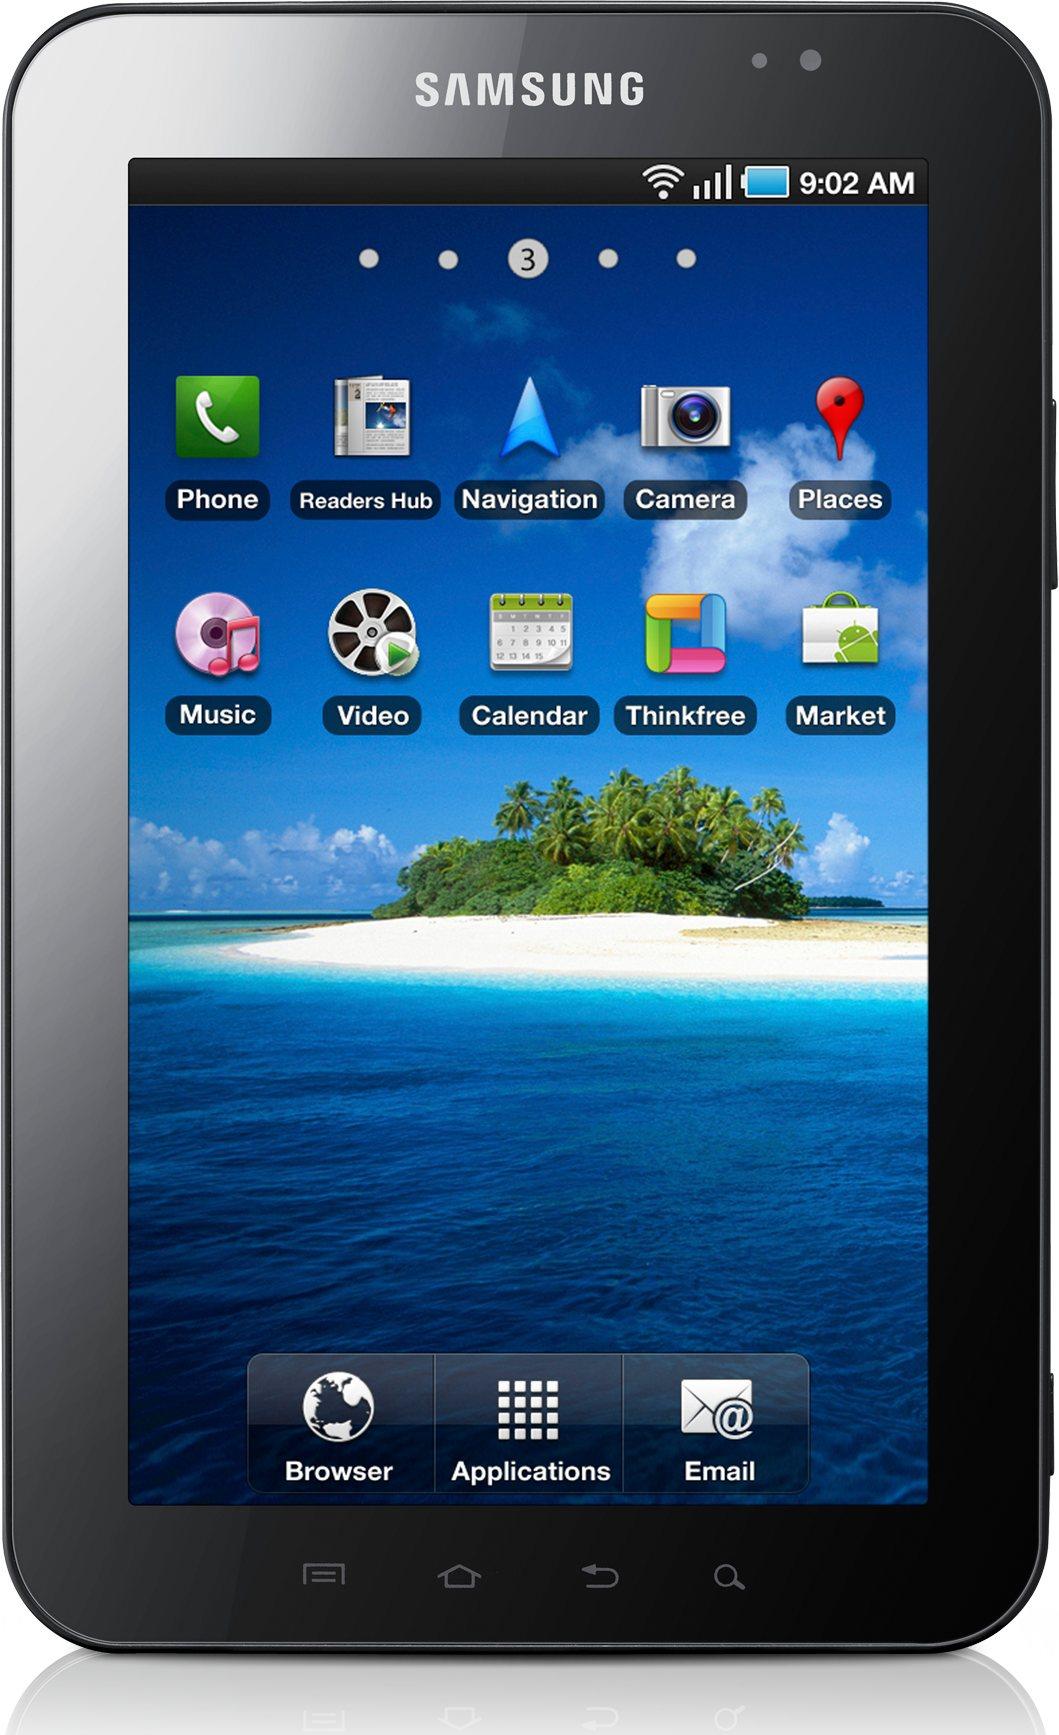 Galaxy Tab (3G + WiFi) (Latin) GT-P1000L